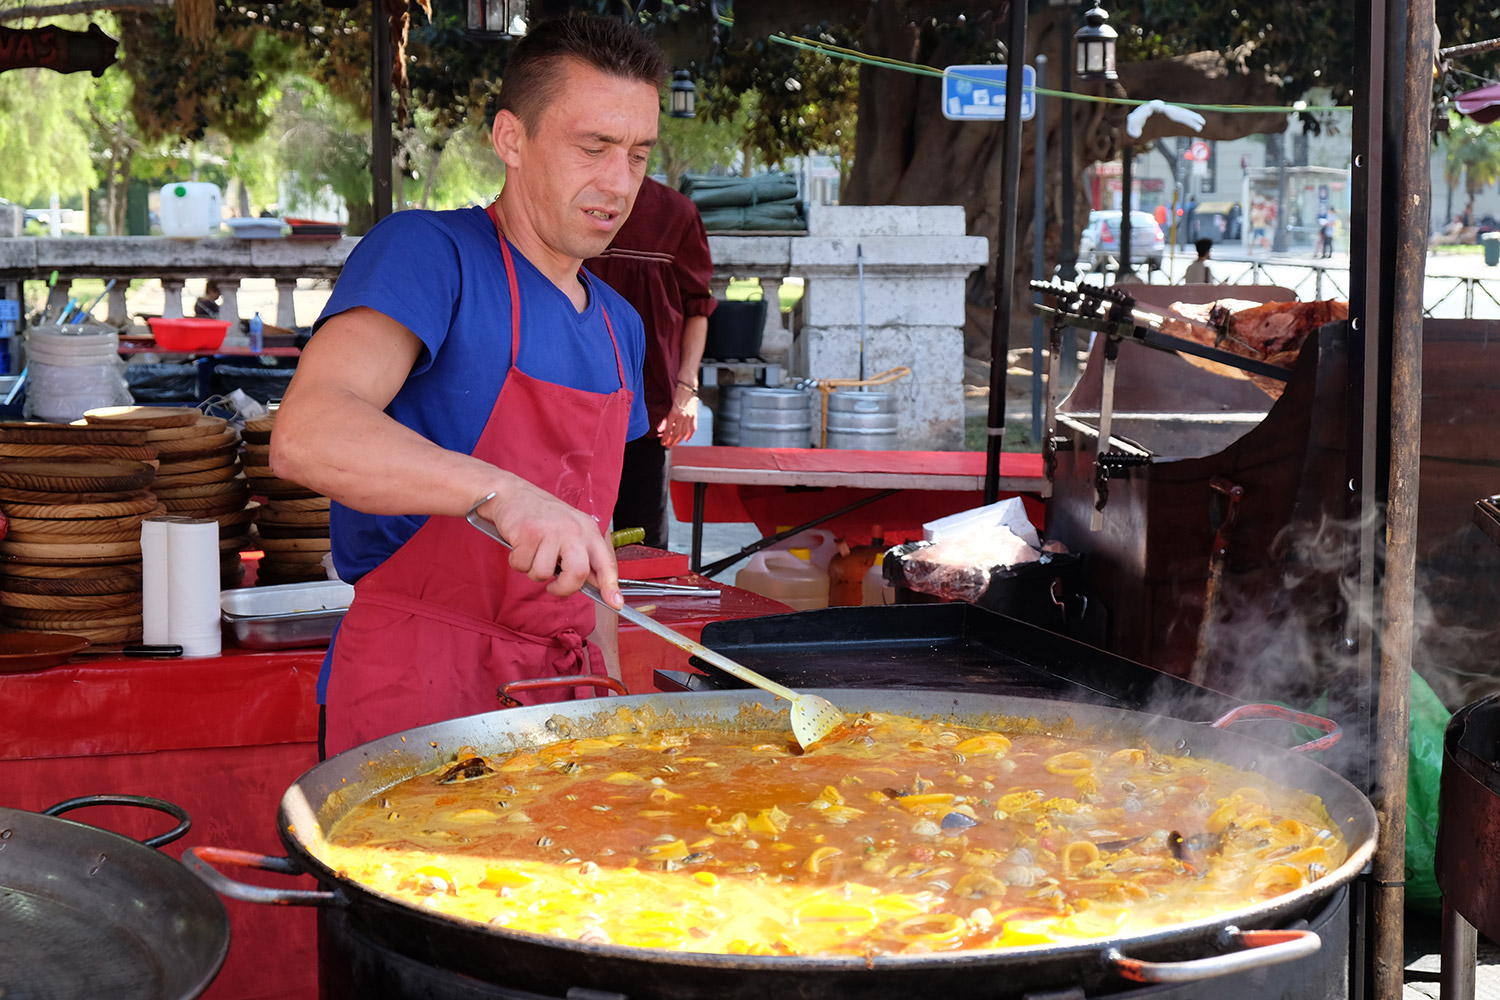 Making paella at the medieval fair